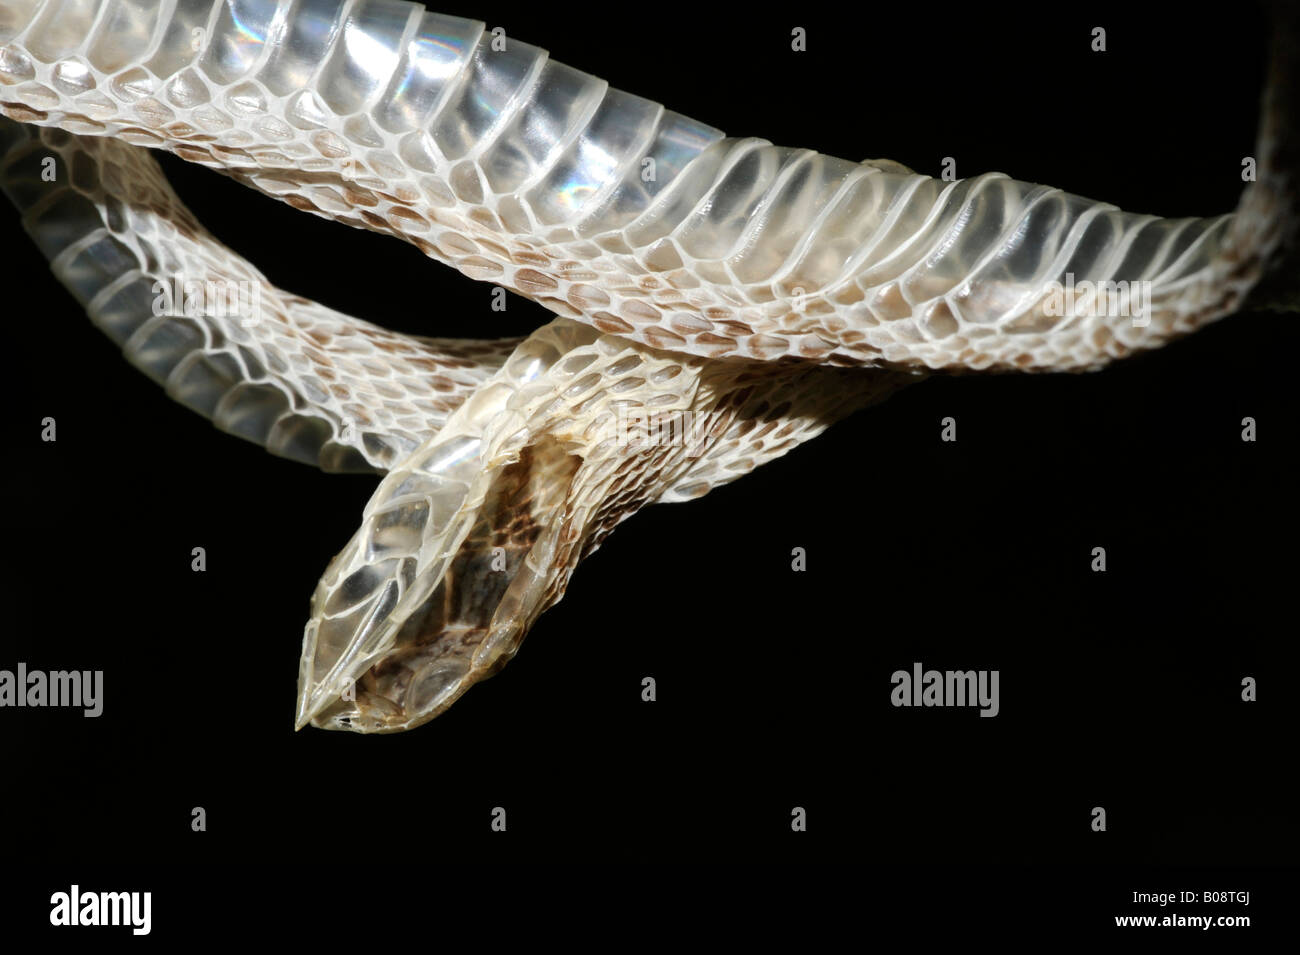 Common Egg Eater or Rhombic Egg-eater (Dasypeltis scabra) snake skin after shedding, East Africa Stock Photo